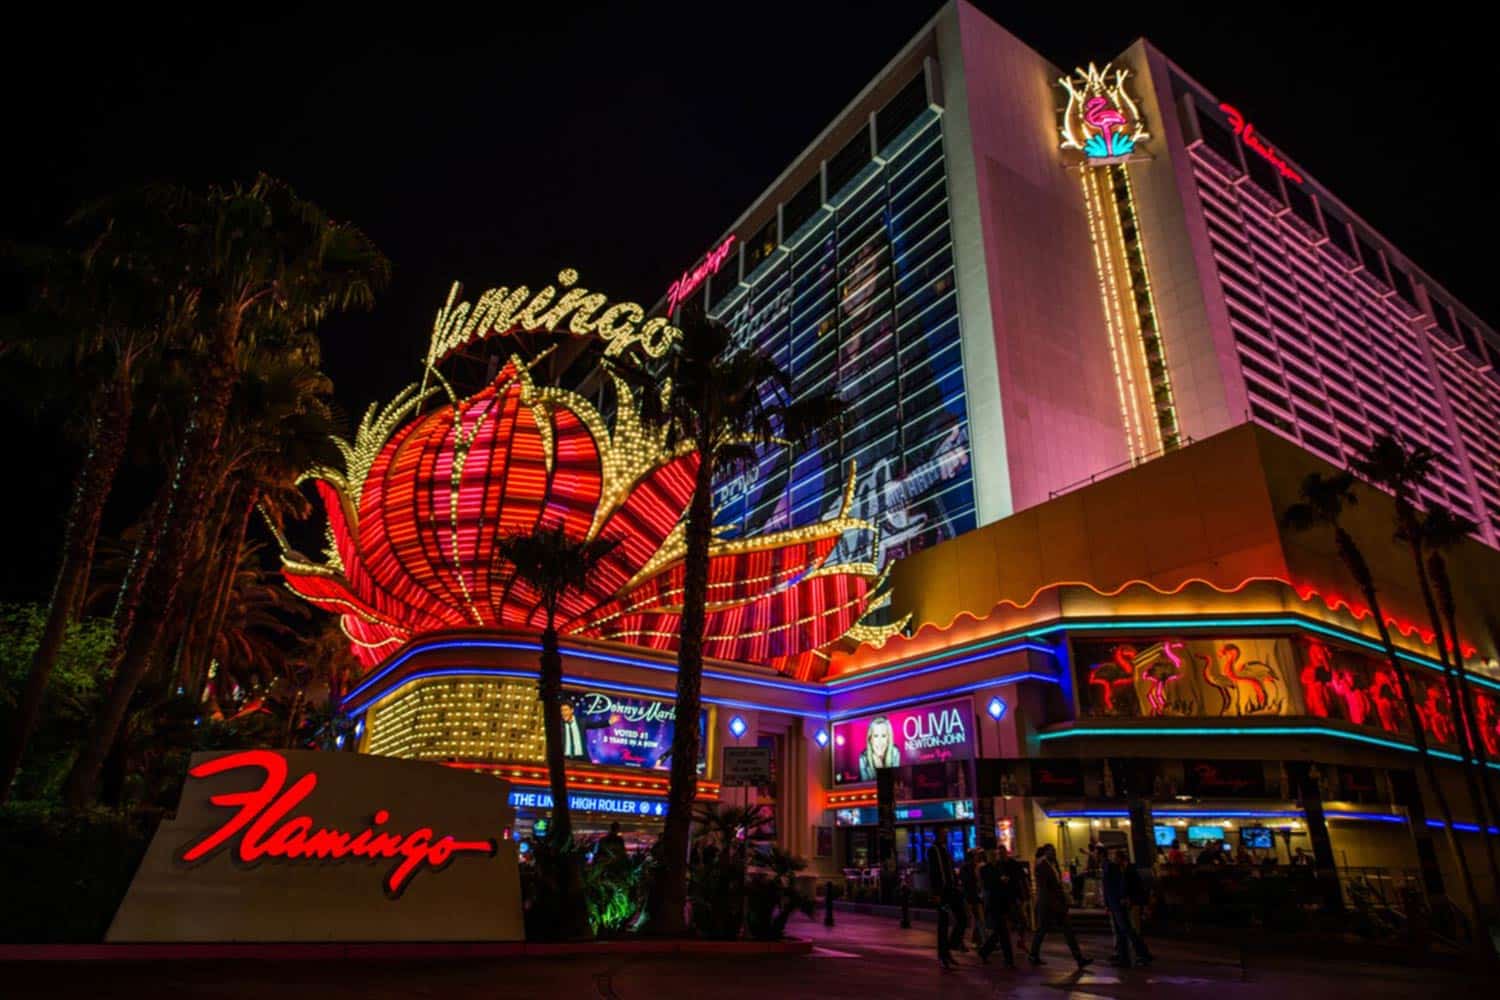 10 Things to Do at Flamingo Las Vegas